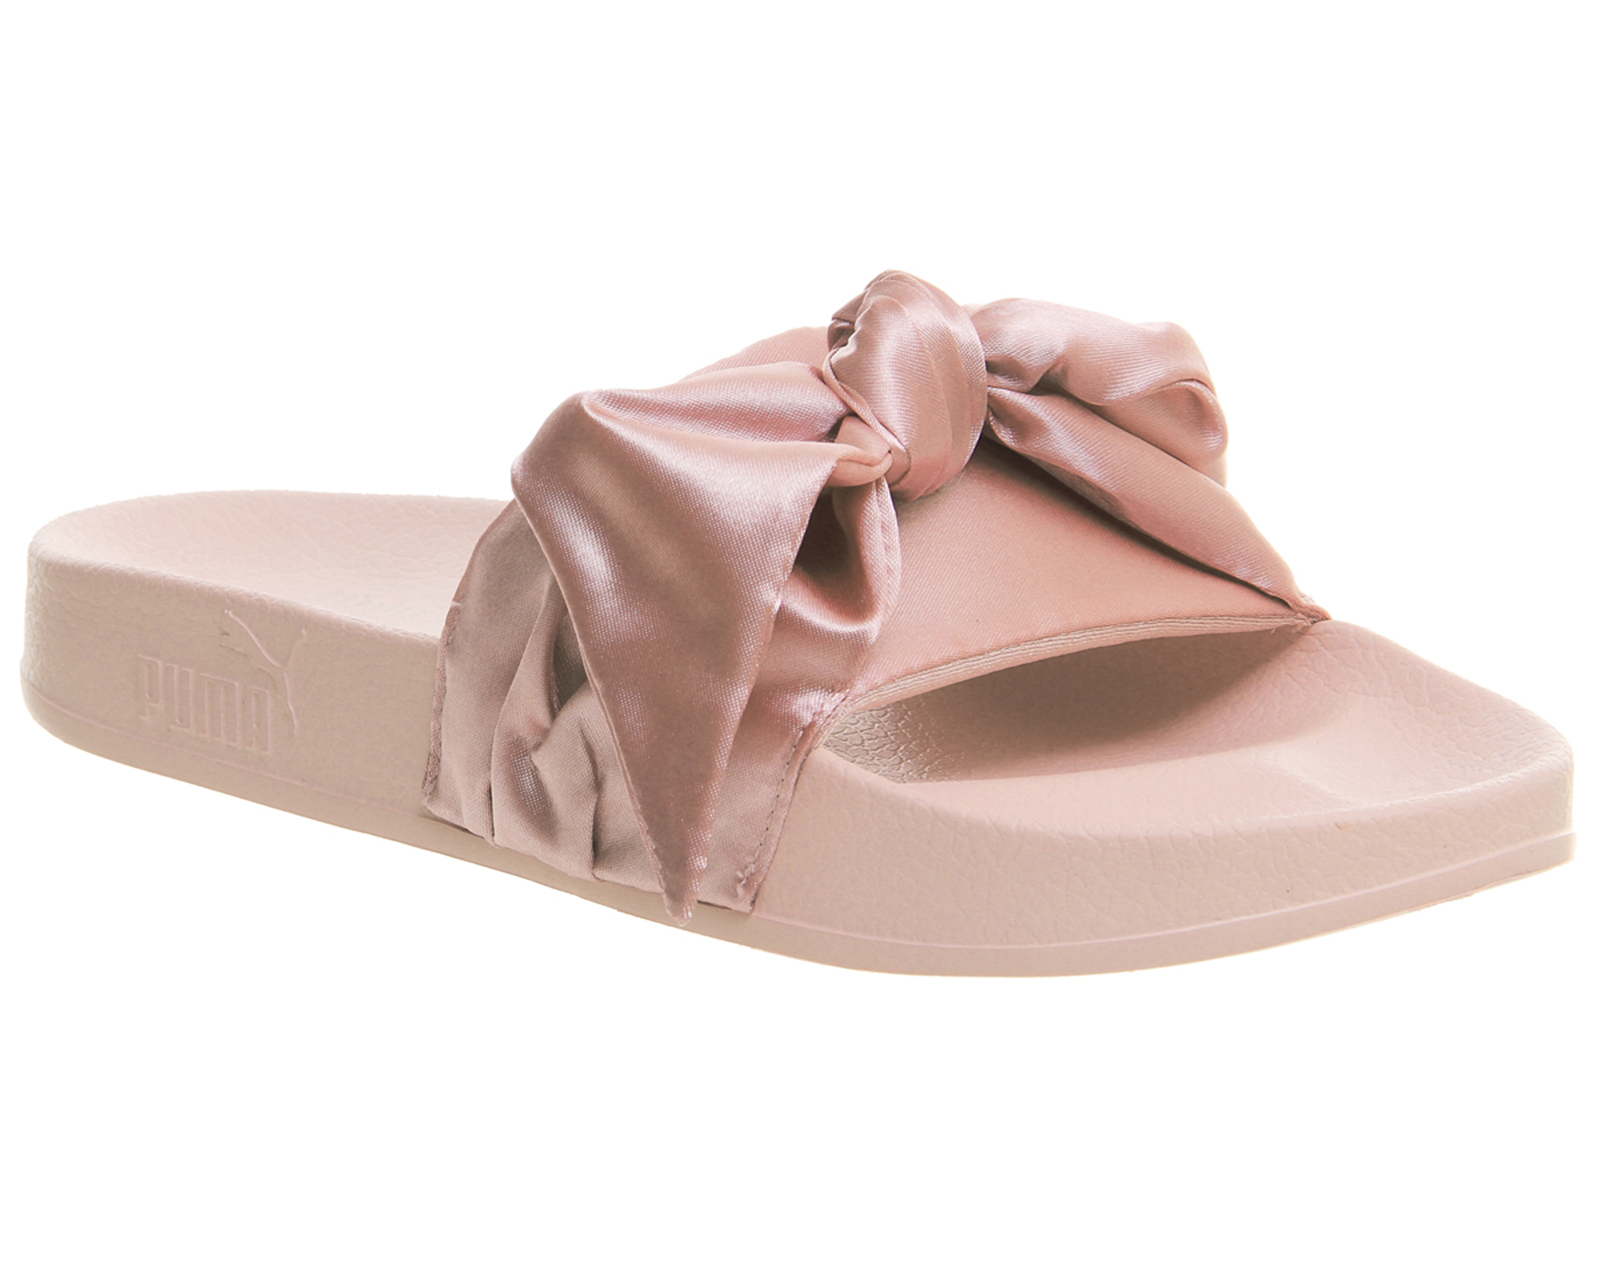 Puma Fenty Ribbon Slide Pink - Sandals